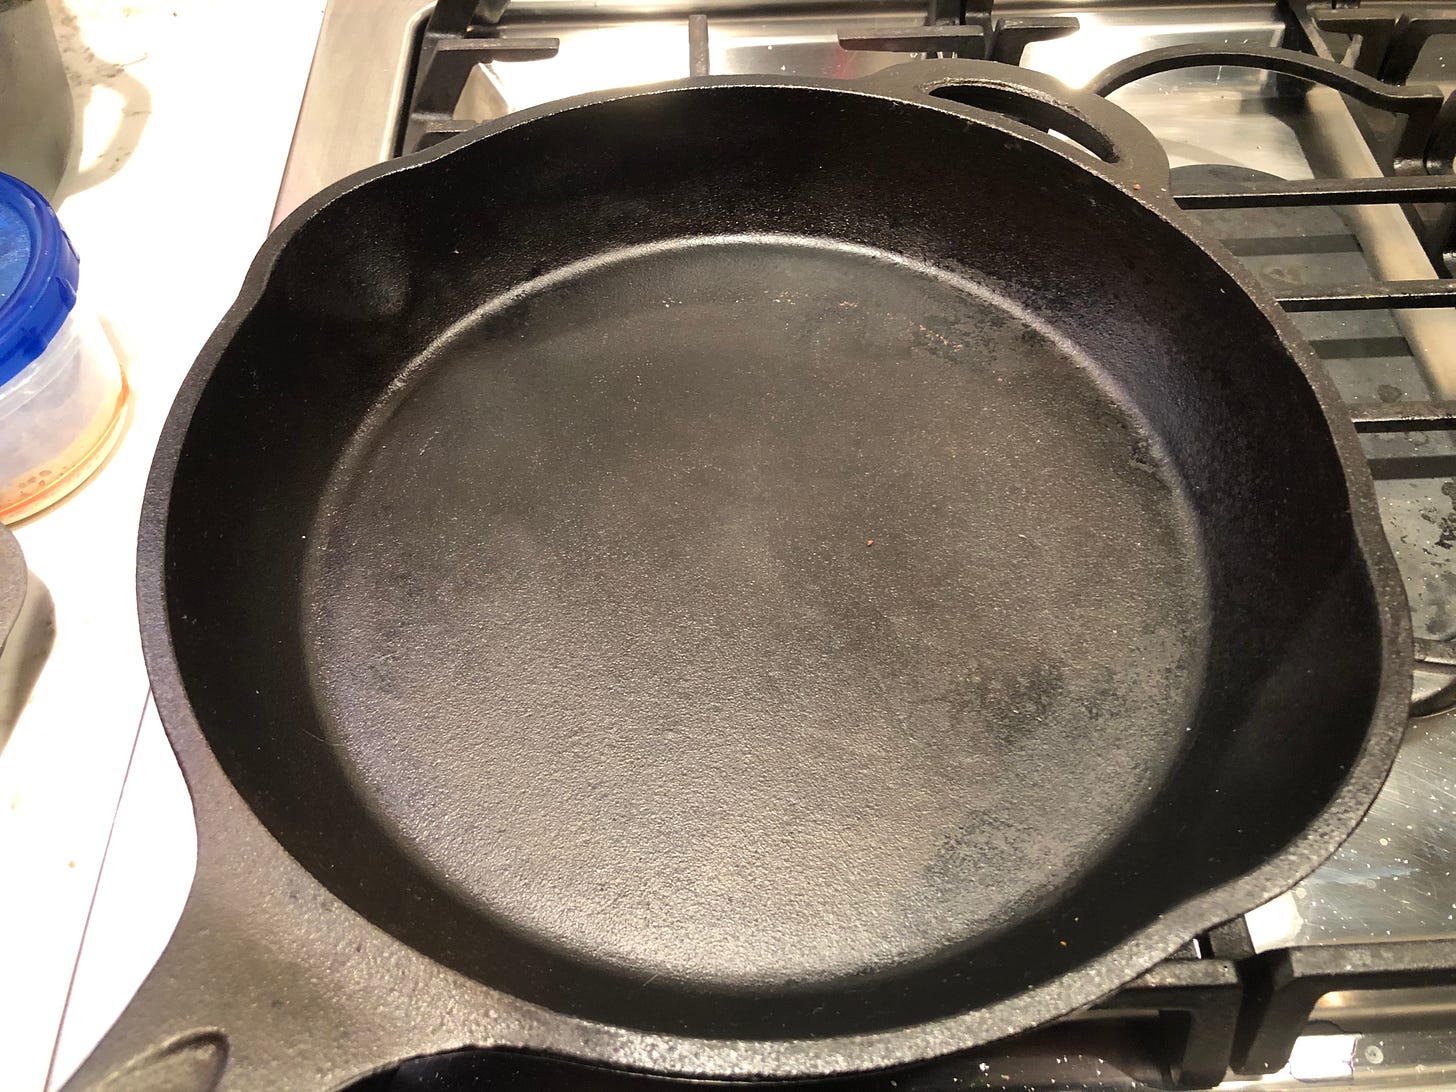 A well-seasoned cast iron pan